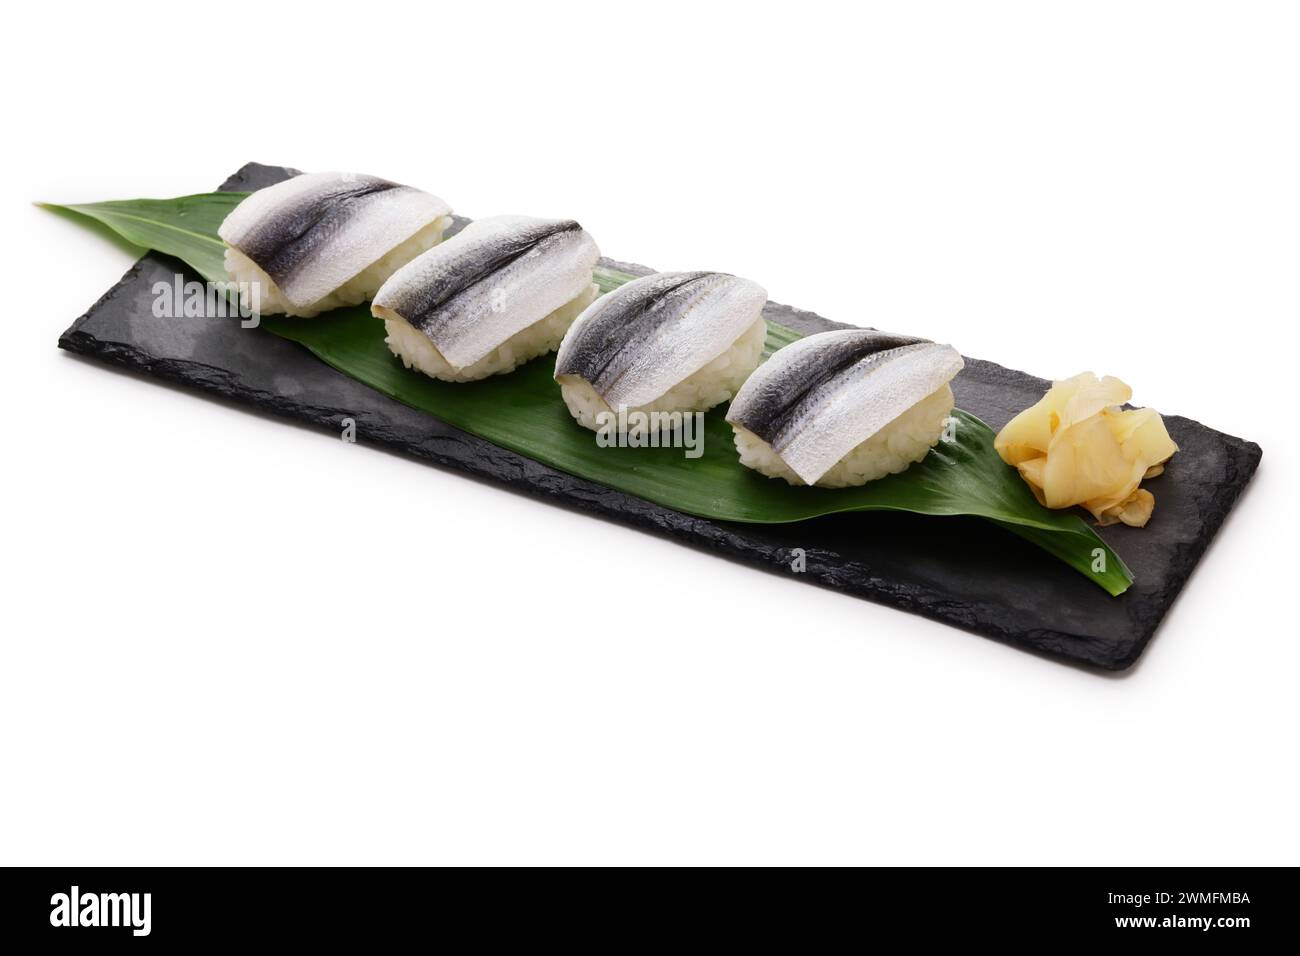 Nigiri sushi of Scaled sardine (Japanese name is Sappa or Mamakari). Japanese food. Stock Photo